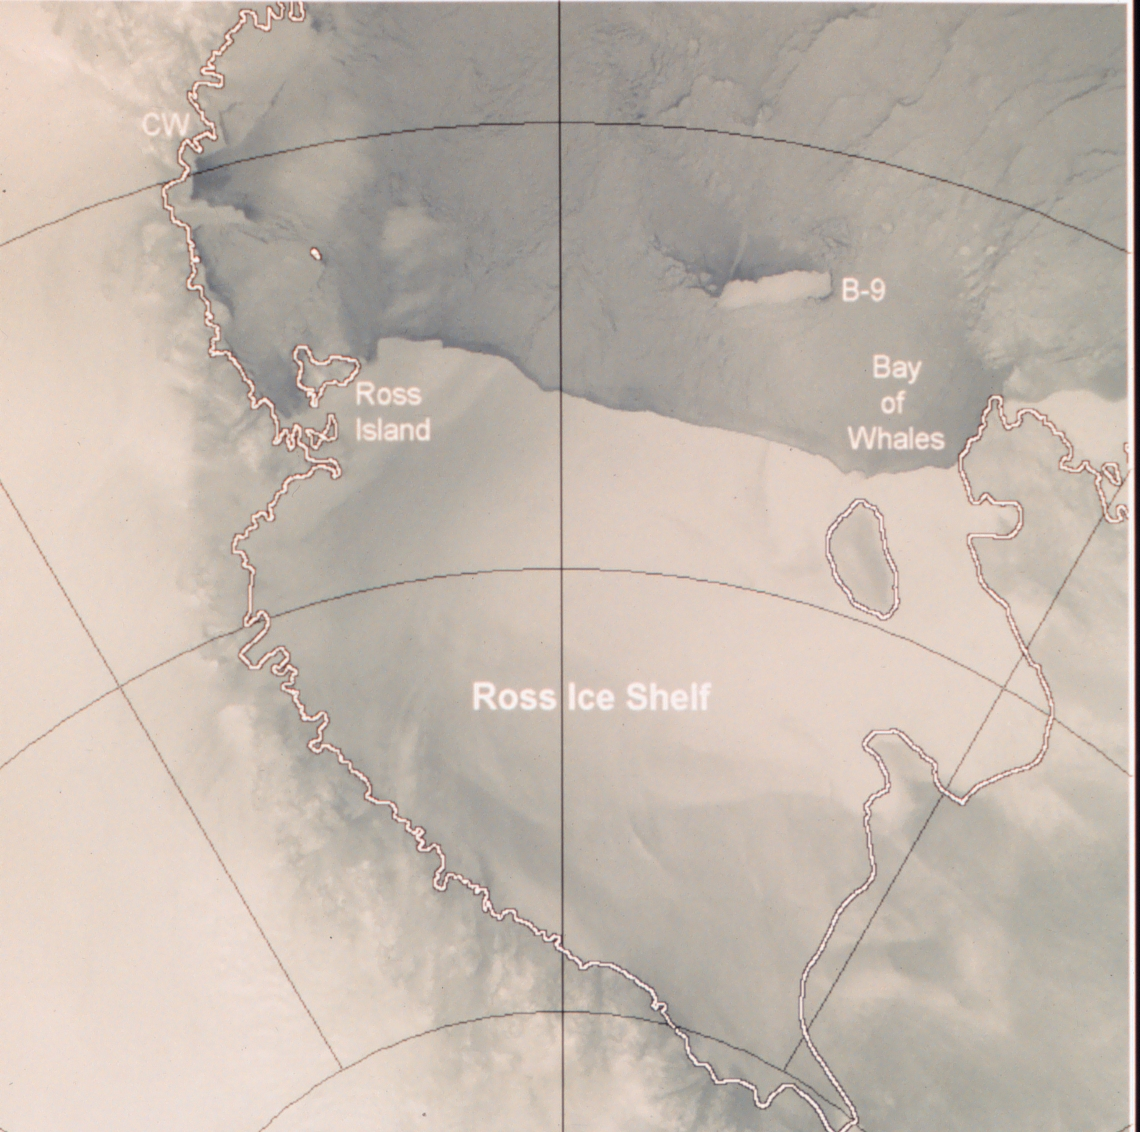 Advanced Very High Resolution Radiometer image of Ross Ice Shelf